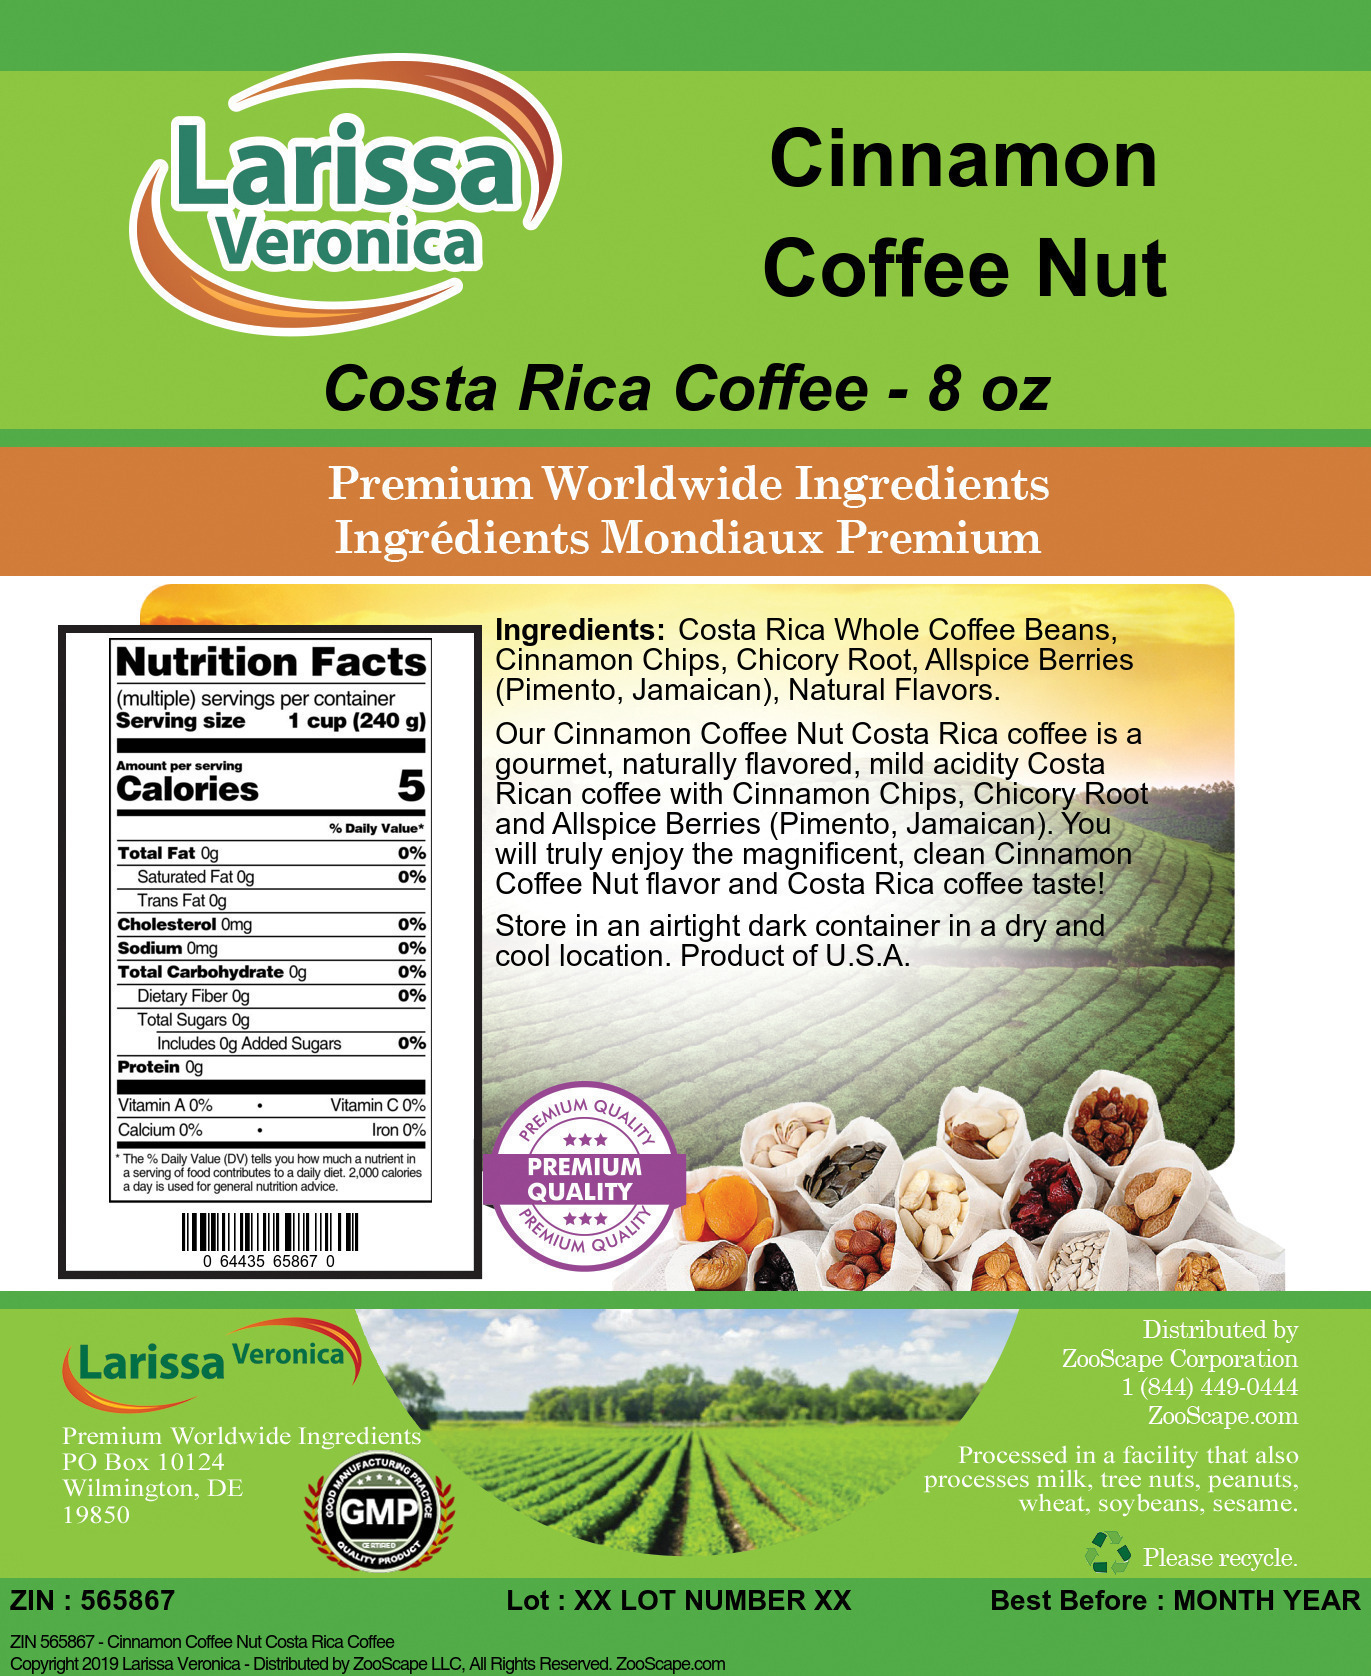 Cinnamon Coffee Nut Costa Rica Coffee - Label